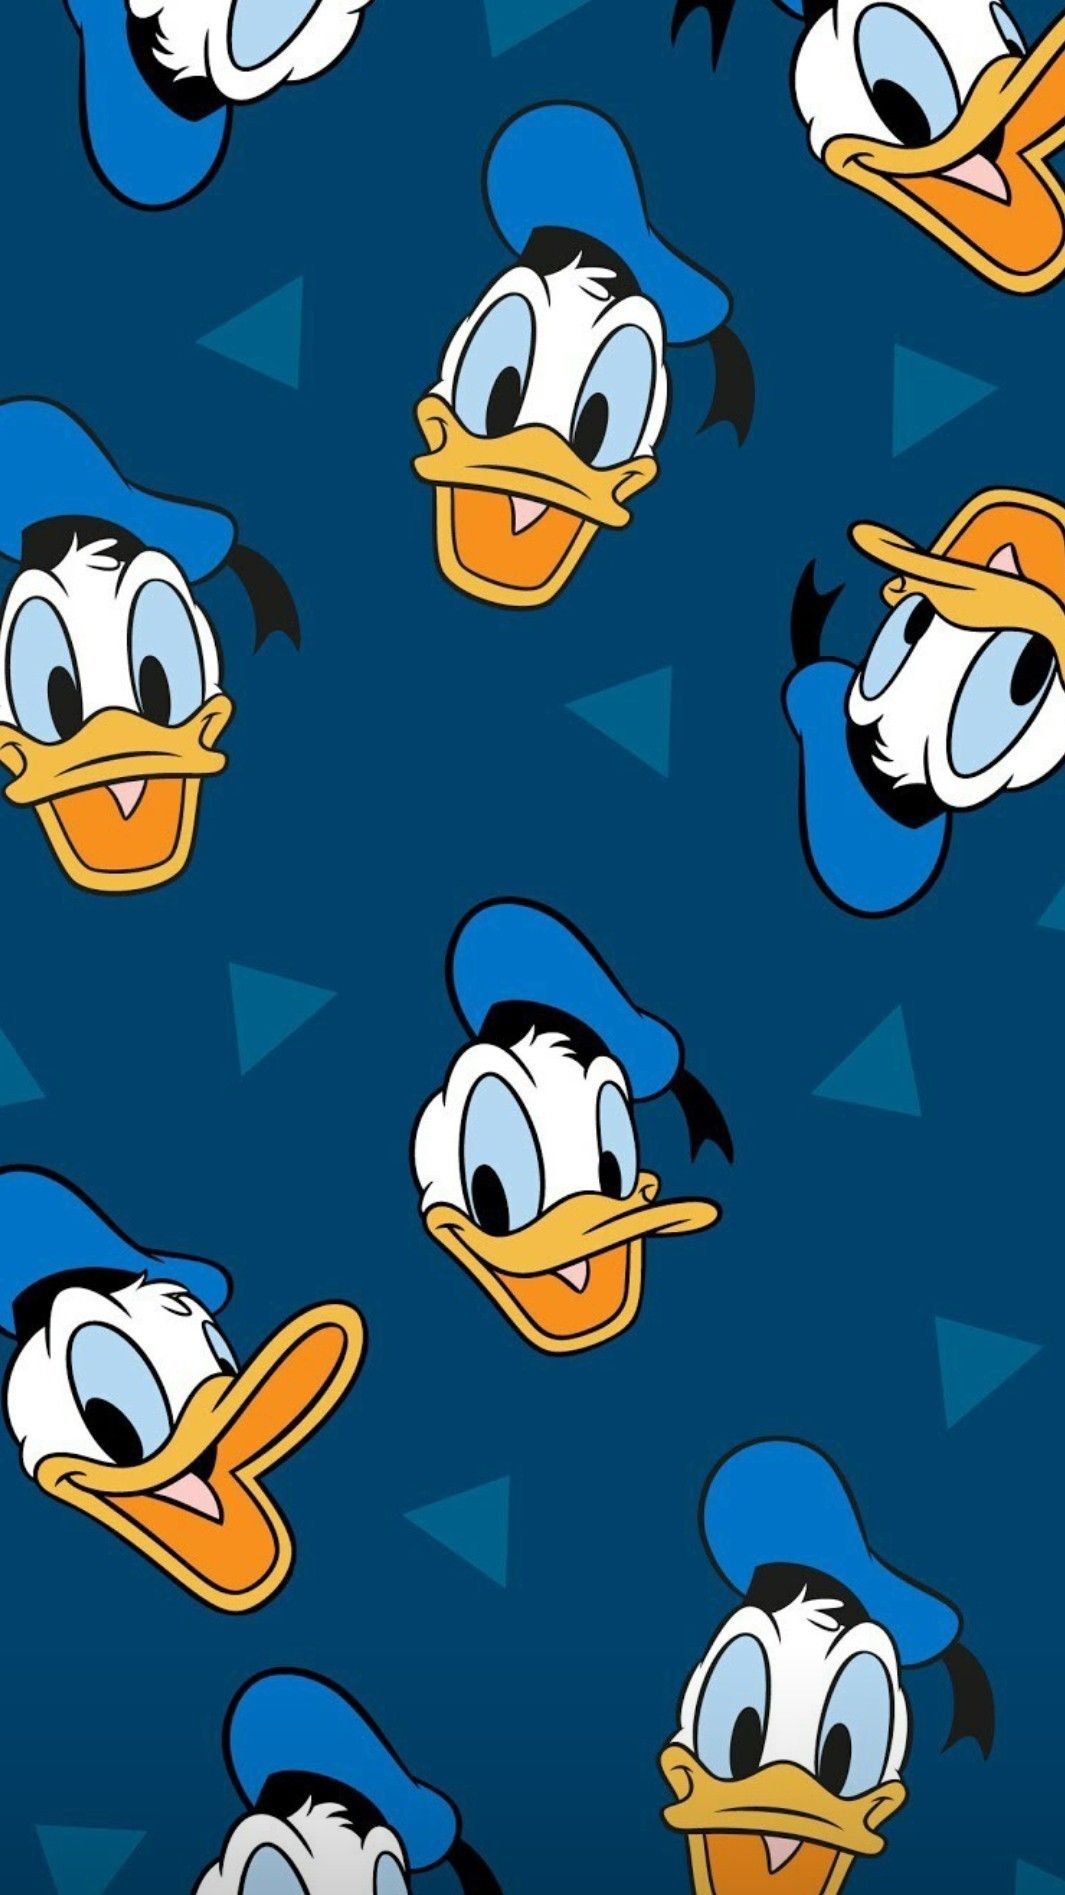 Disney Donald Duck iPhone Wallpaper Free Disney Donald Duck iPhone Background